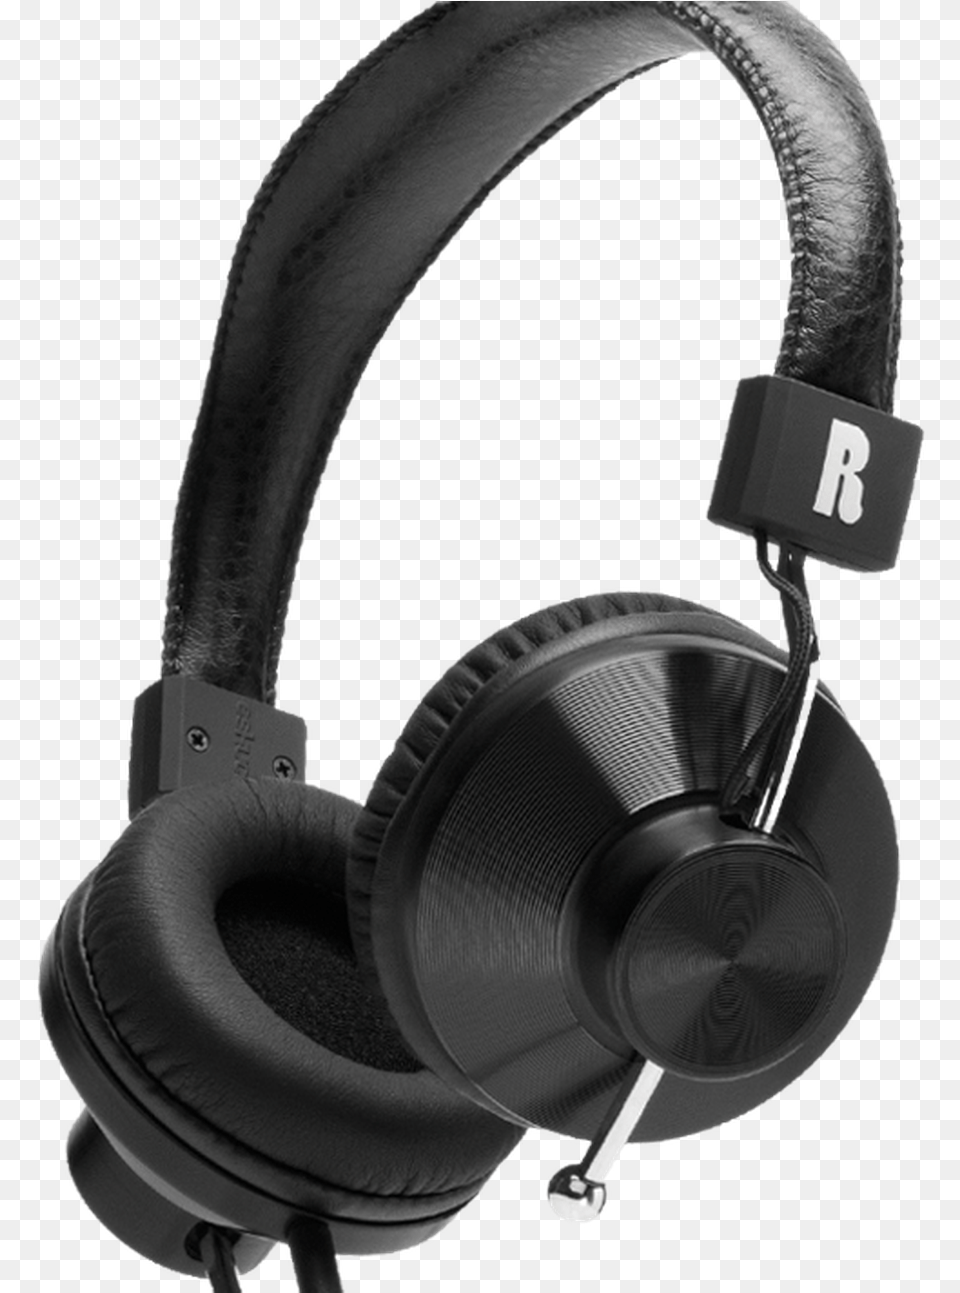 Audfonos On Ear Bluetooth Clarity Negro, Electronics, Headphones Png Image